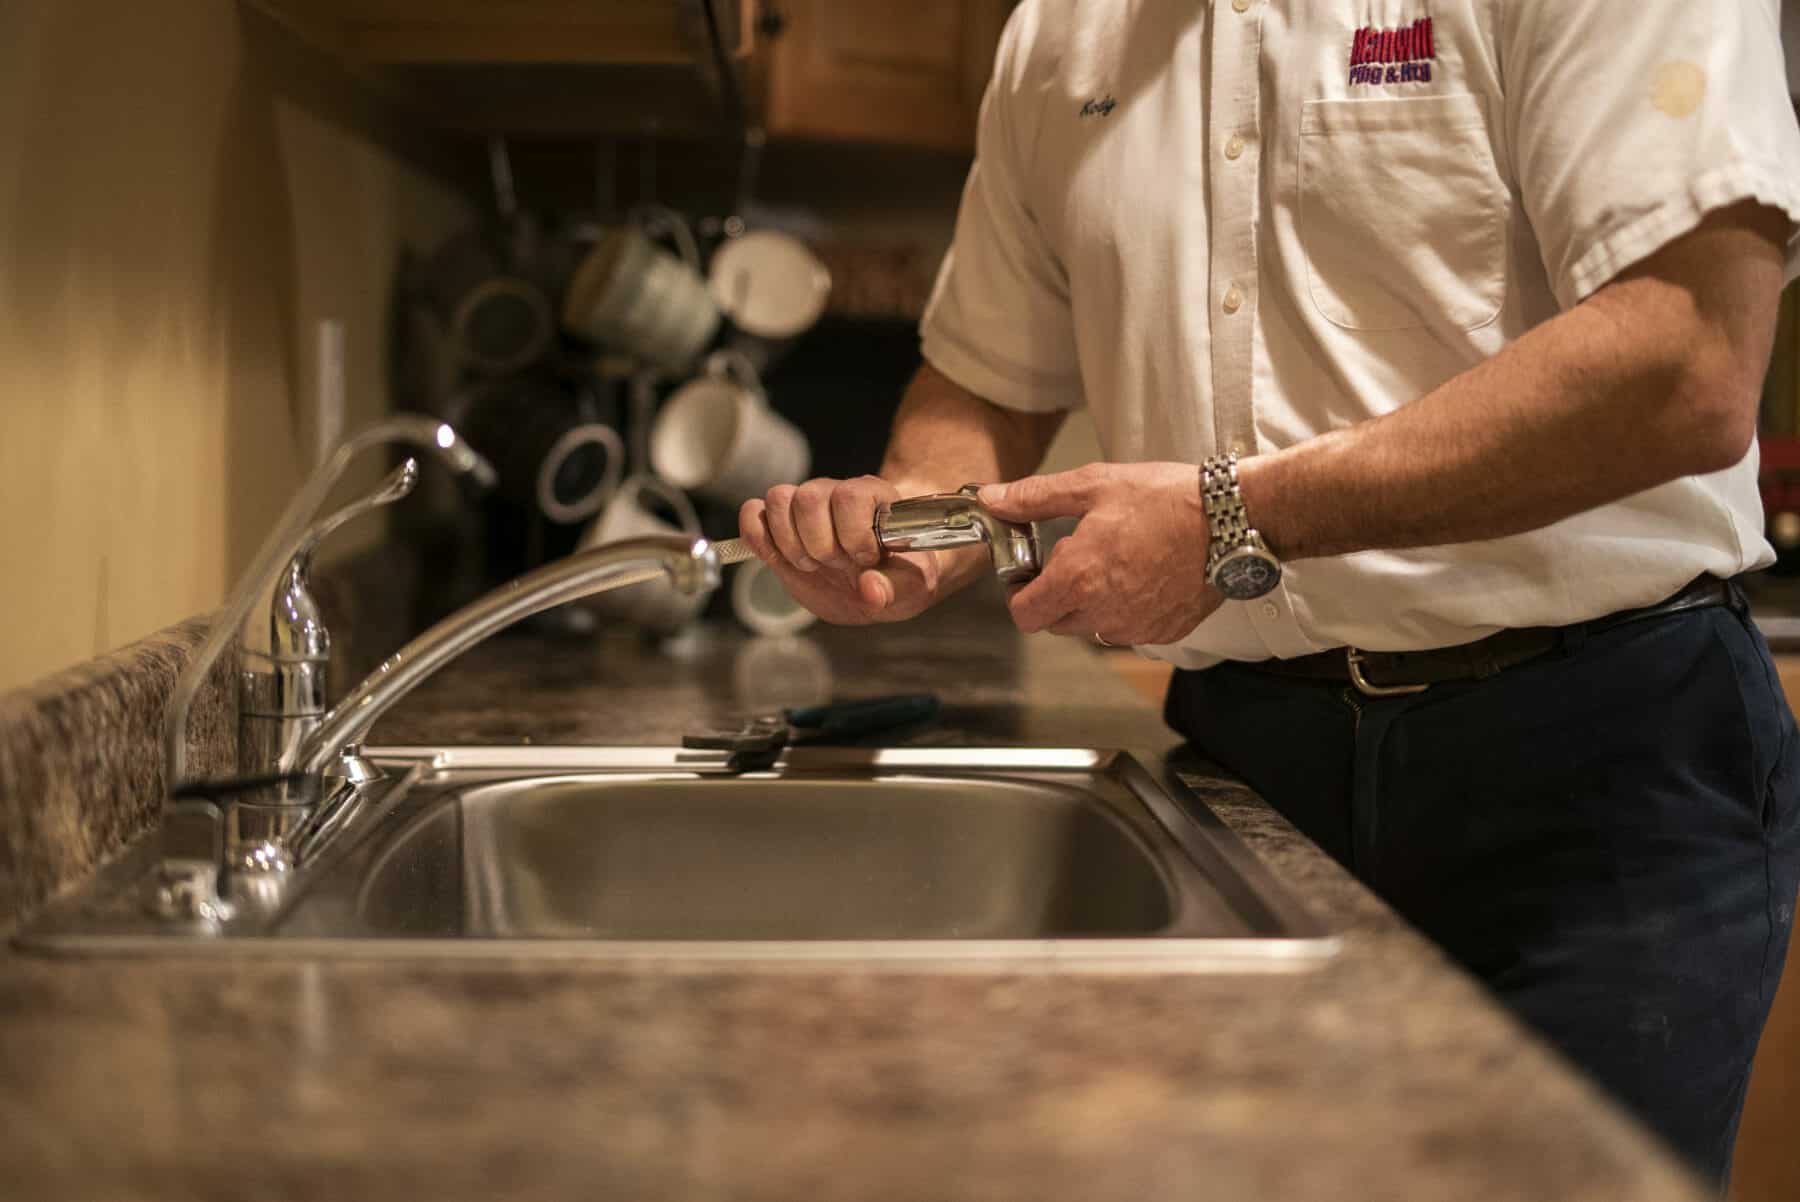 Manwill plumber fixes sink in Alpine, UT home